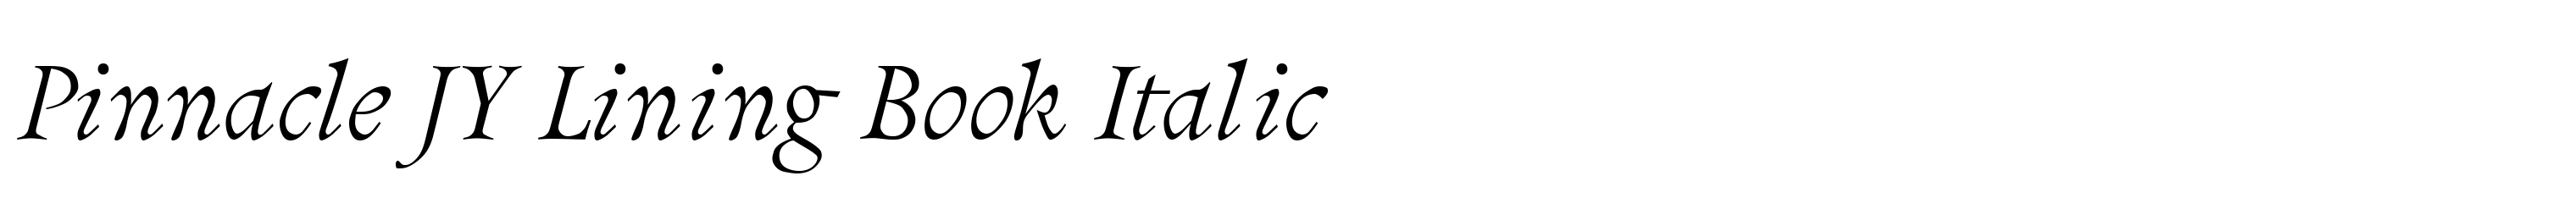 Pinnacle JY Lining Book Italic